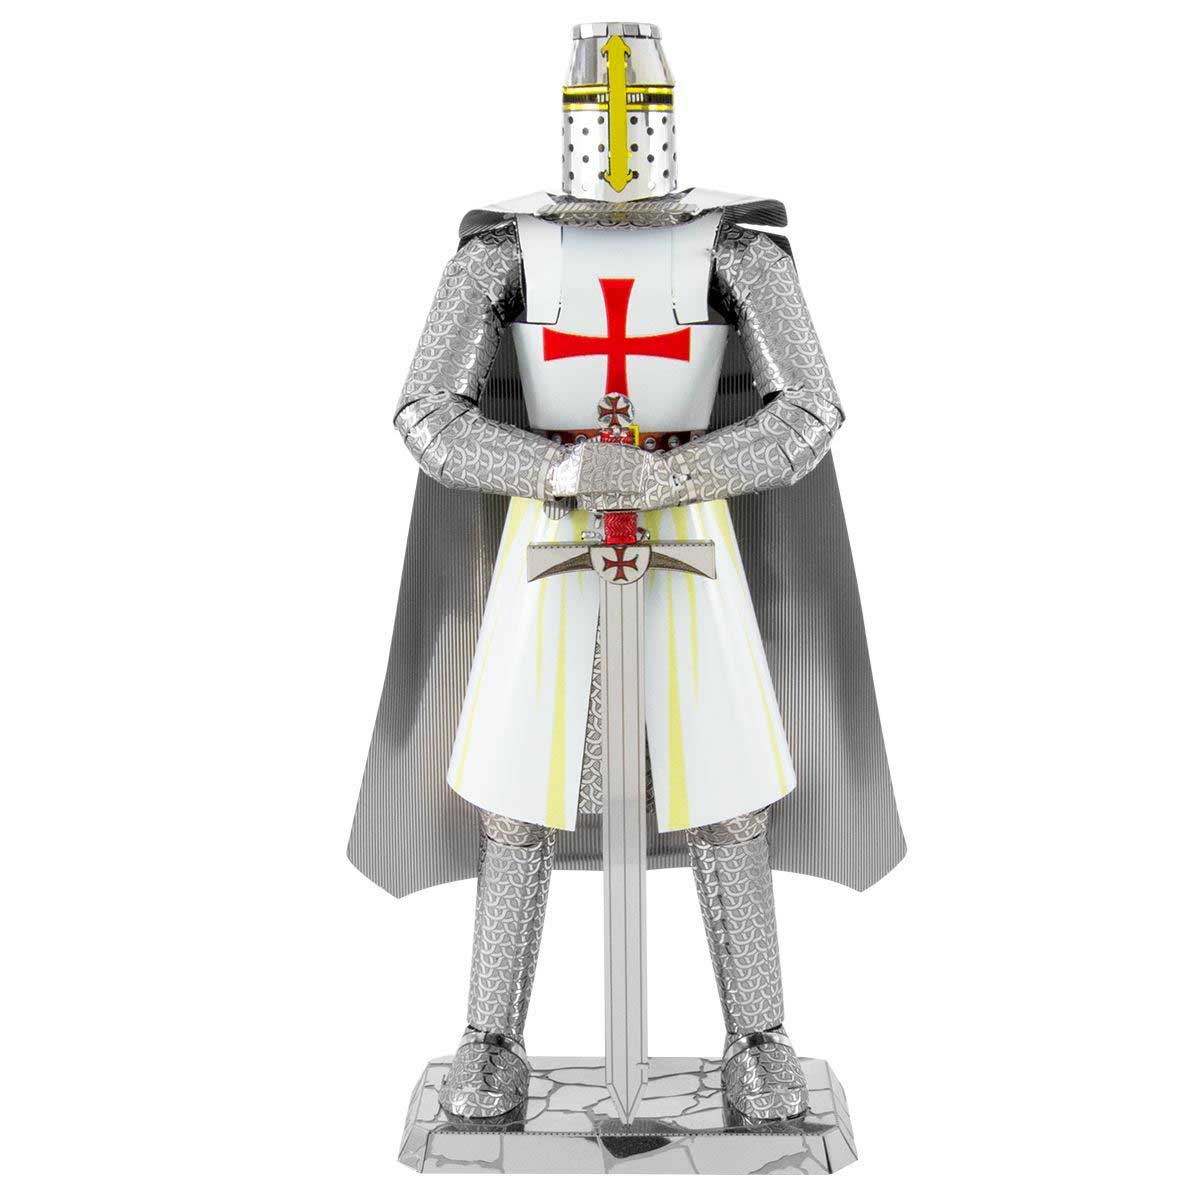 Templar Knight Military Metal Puzzles